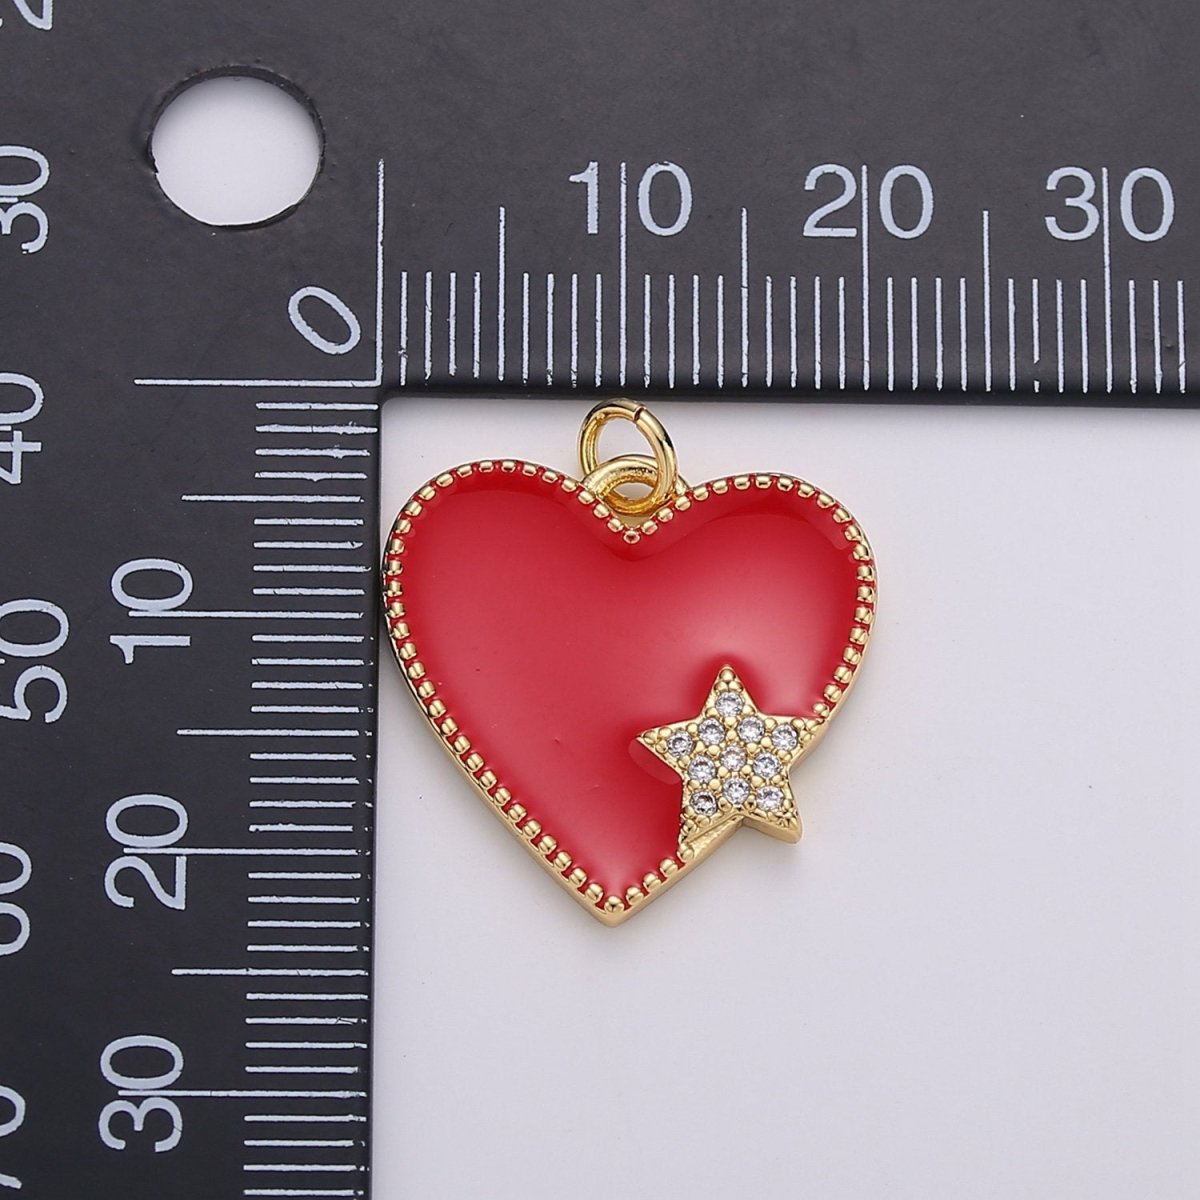 Pink Enamel Heart Charm Pendant, Red Enamel Heart Pendant, 14K gold Filled Star Heart Jewelry Making SupplyC-573 - DLUXCA